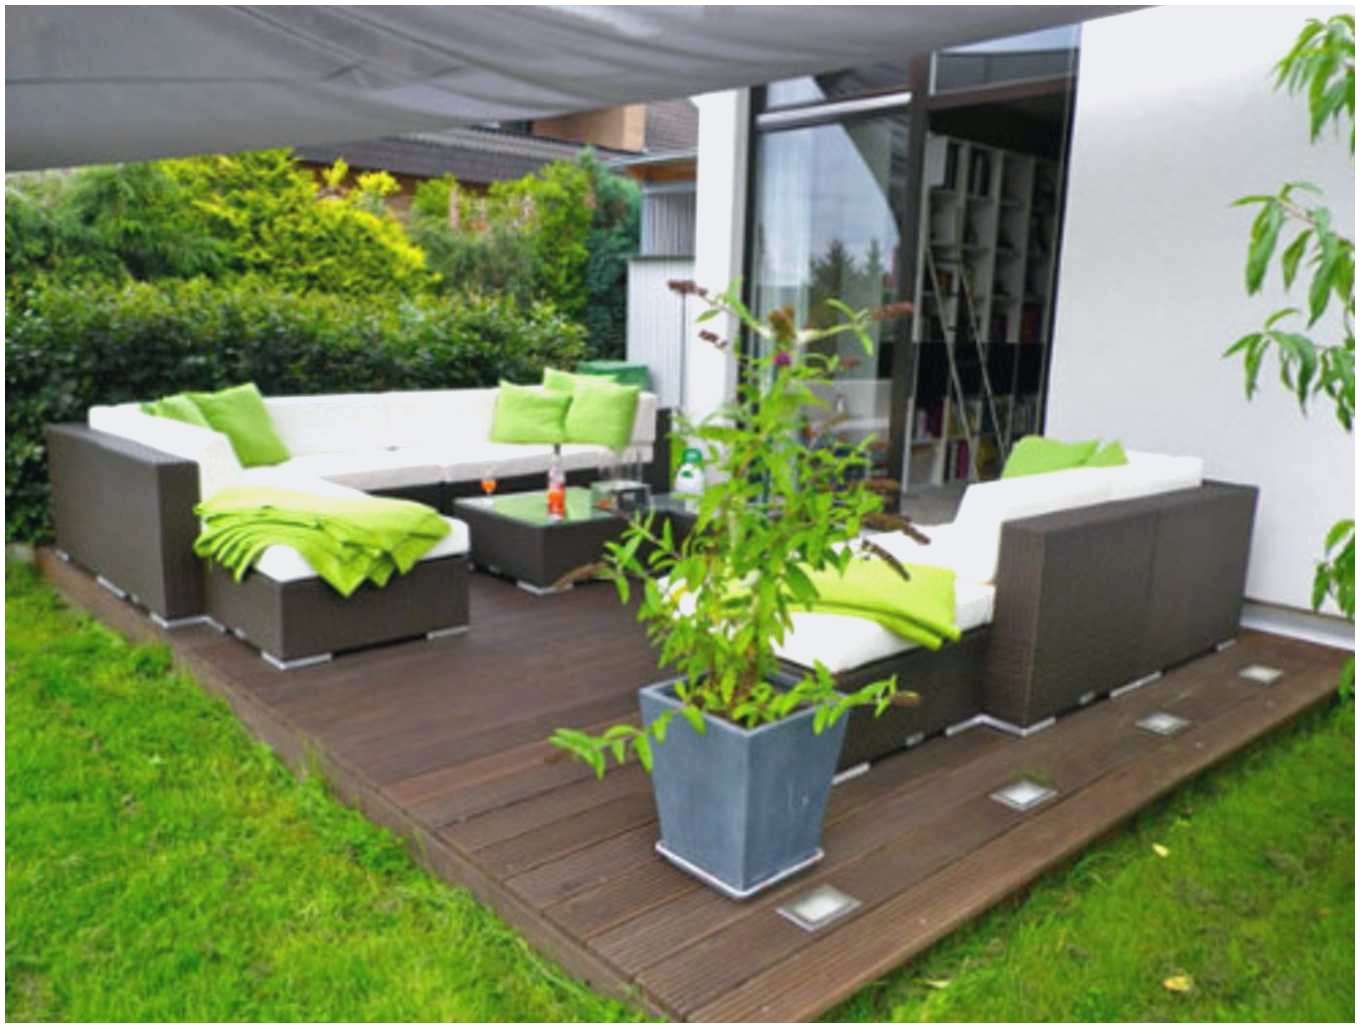 amenagement jardin exterieur beau idee terrasse exterieur de amenagement jardin exterieur